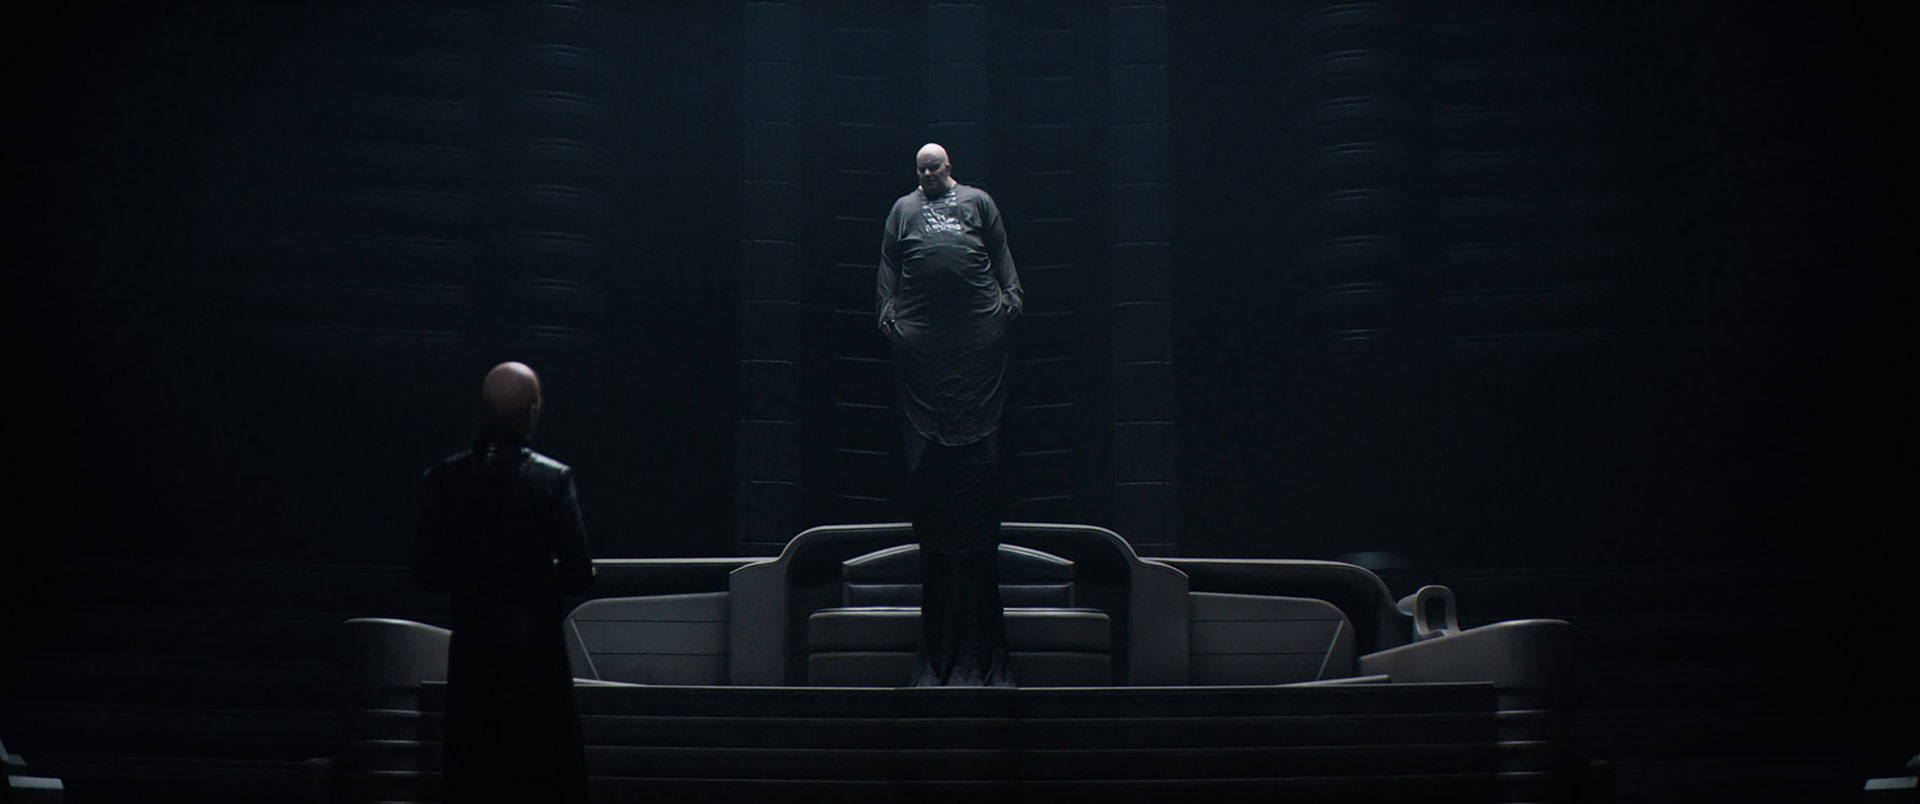 Baron Harkonnen (Stellan Skarsgård) levitates above the ground as he speaks to his Mentat, Piter de Vries (David Dastmalchian), in the Dune (2021) movie. 